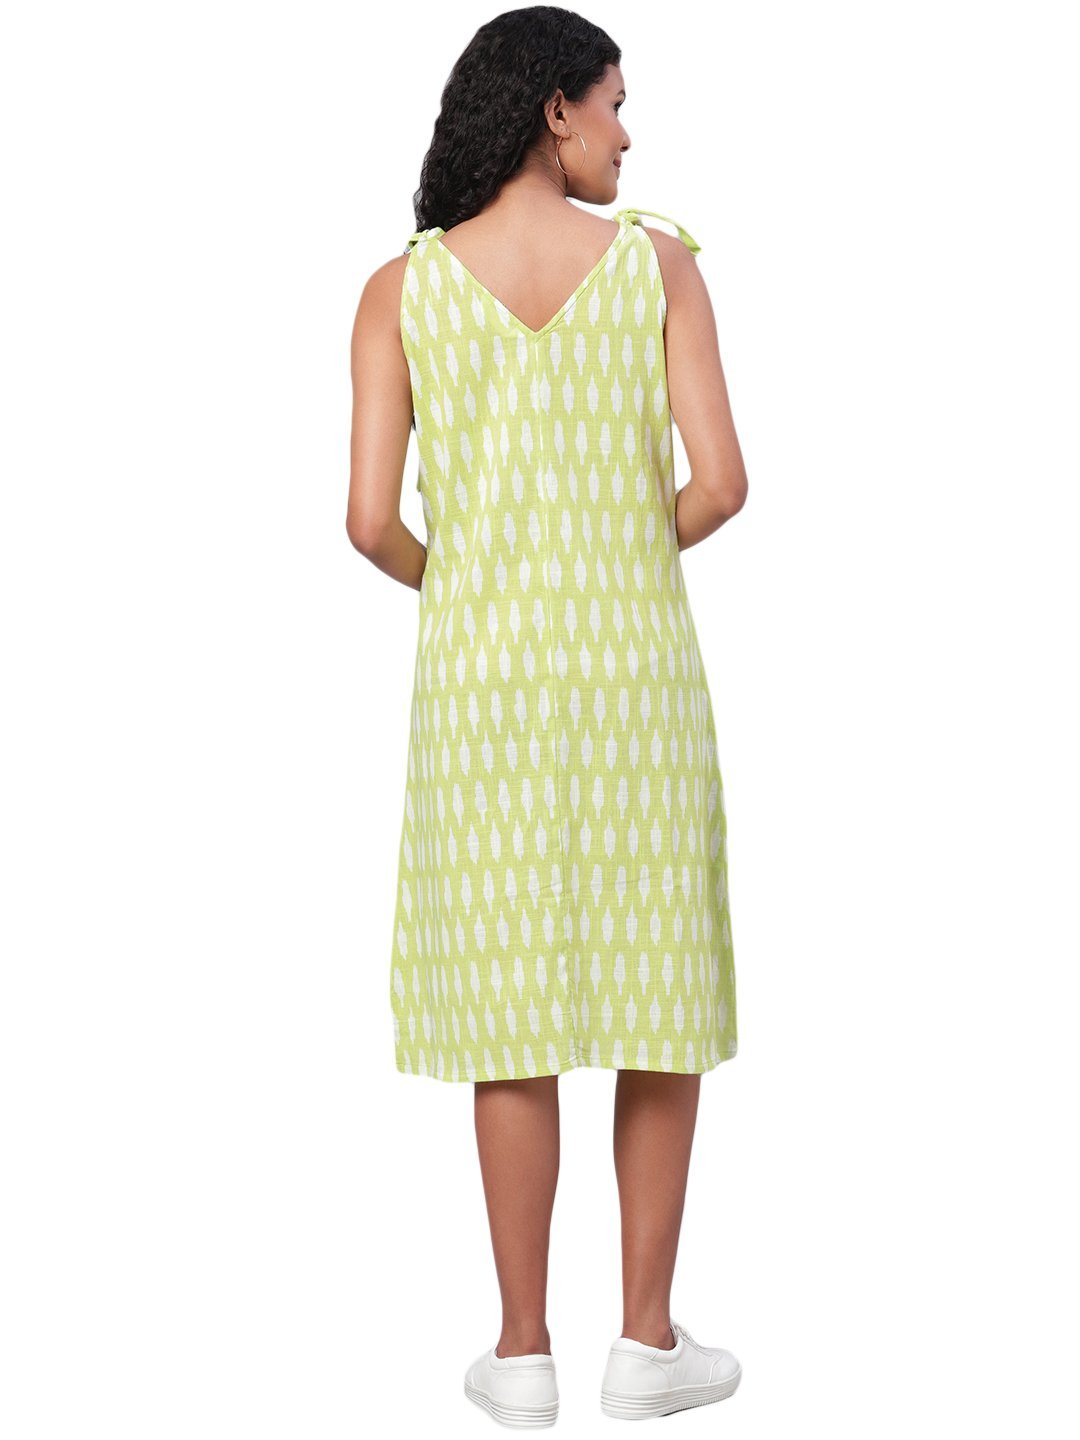 Women's Green Printed Sleeveless Cotton Slub V Neck Casual Dress - Myshka